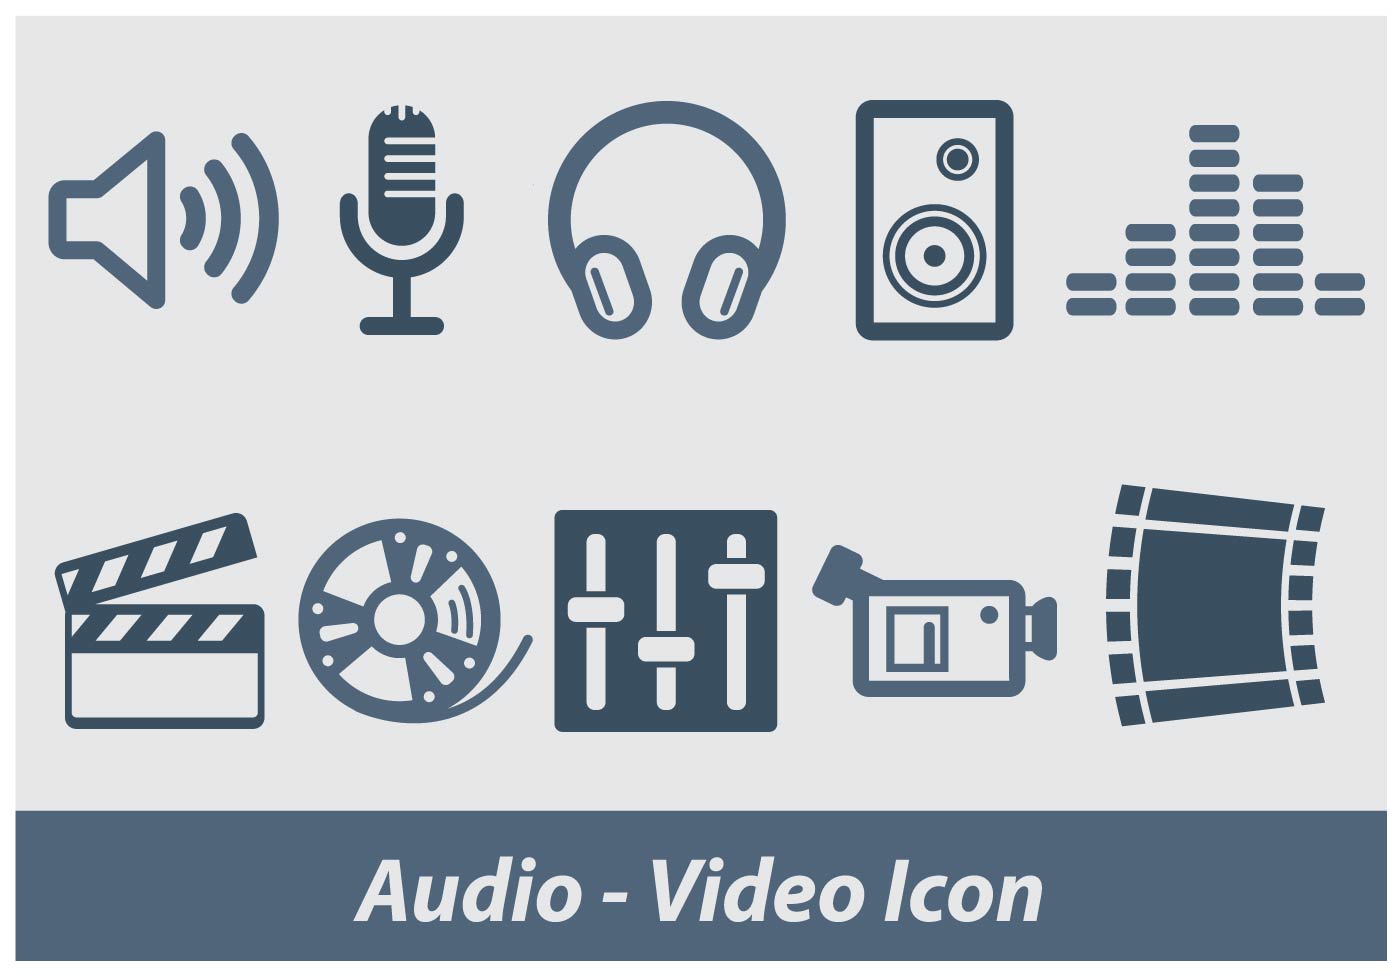 Audio And Video Vector Icon - Download Free Vectors ...